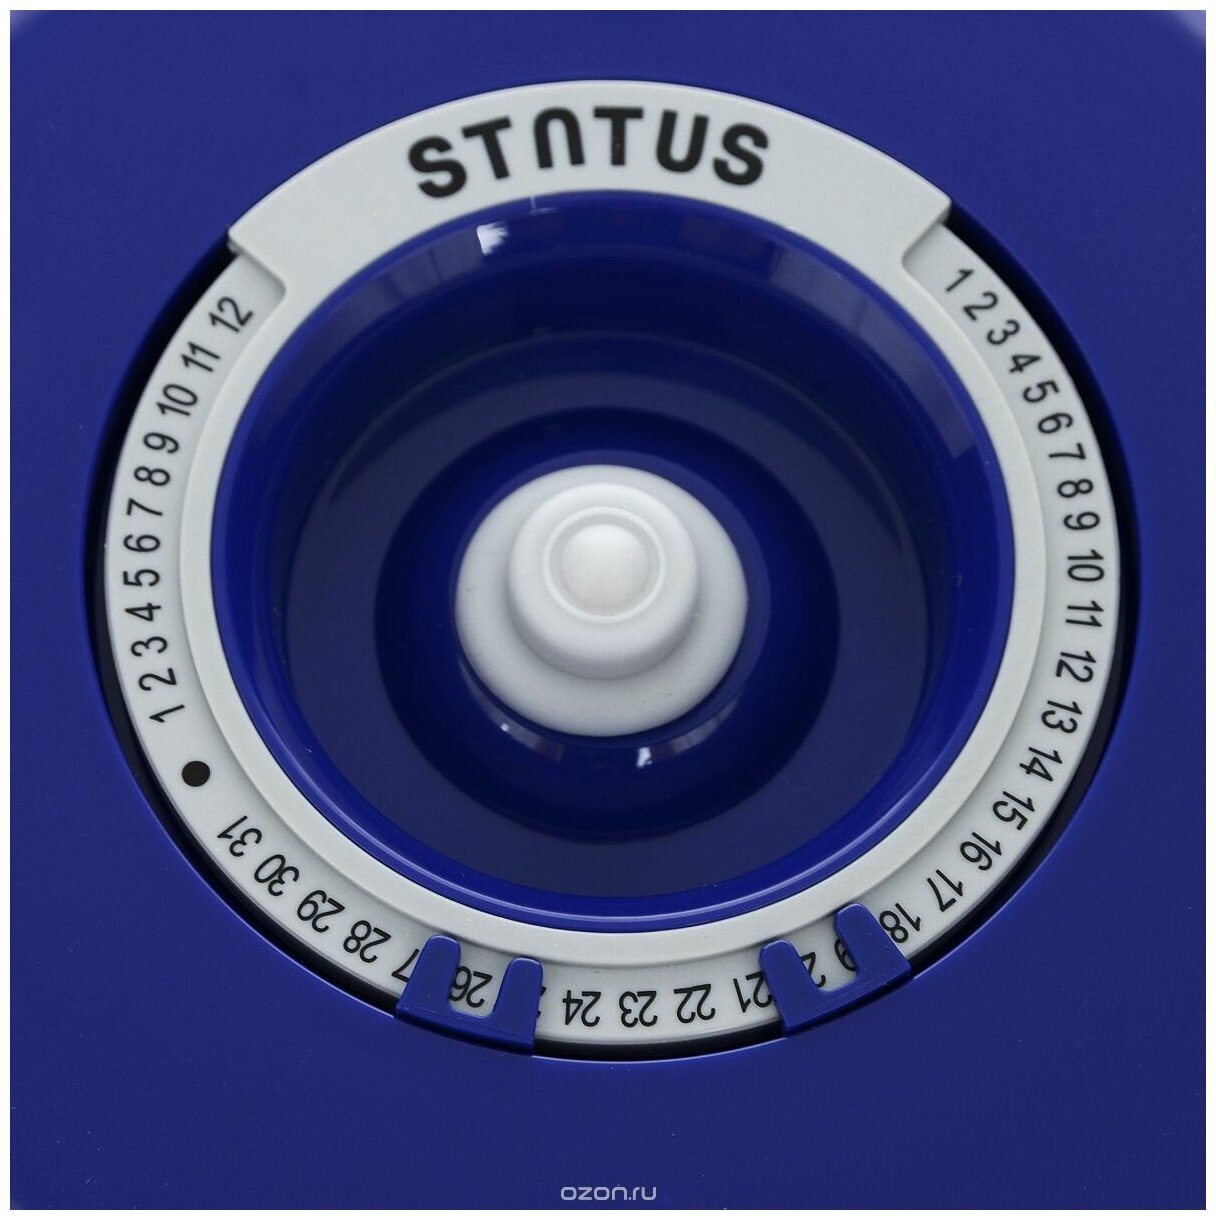 Контейнер STATUS VAC-RD-15 Blue - фотография № 3